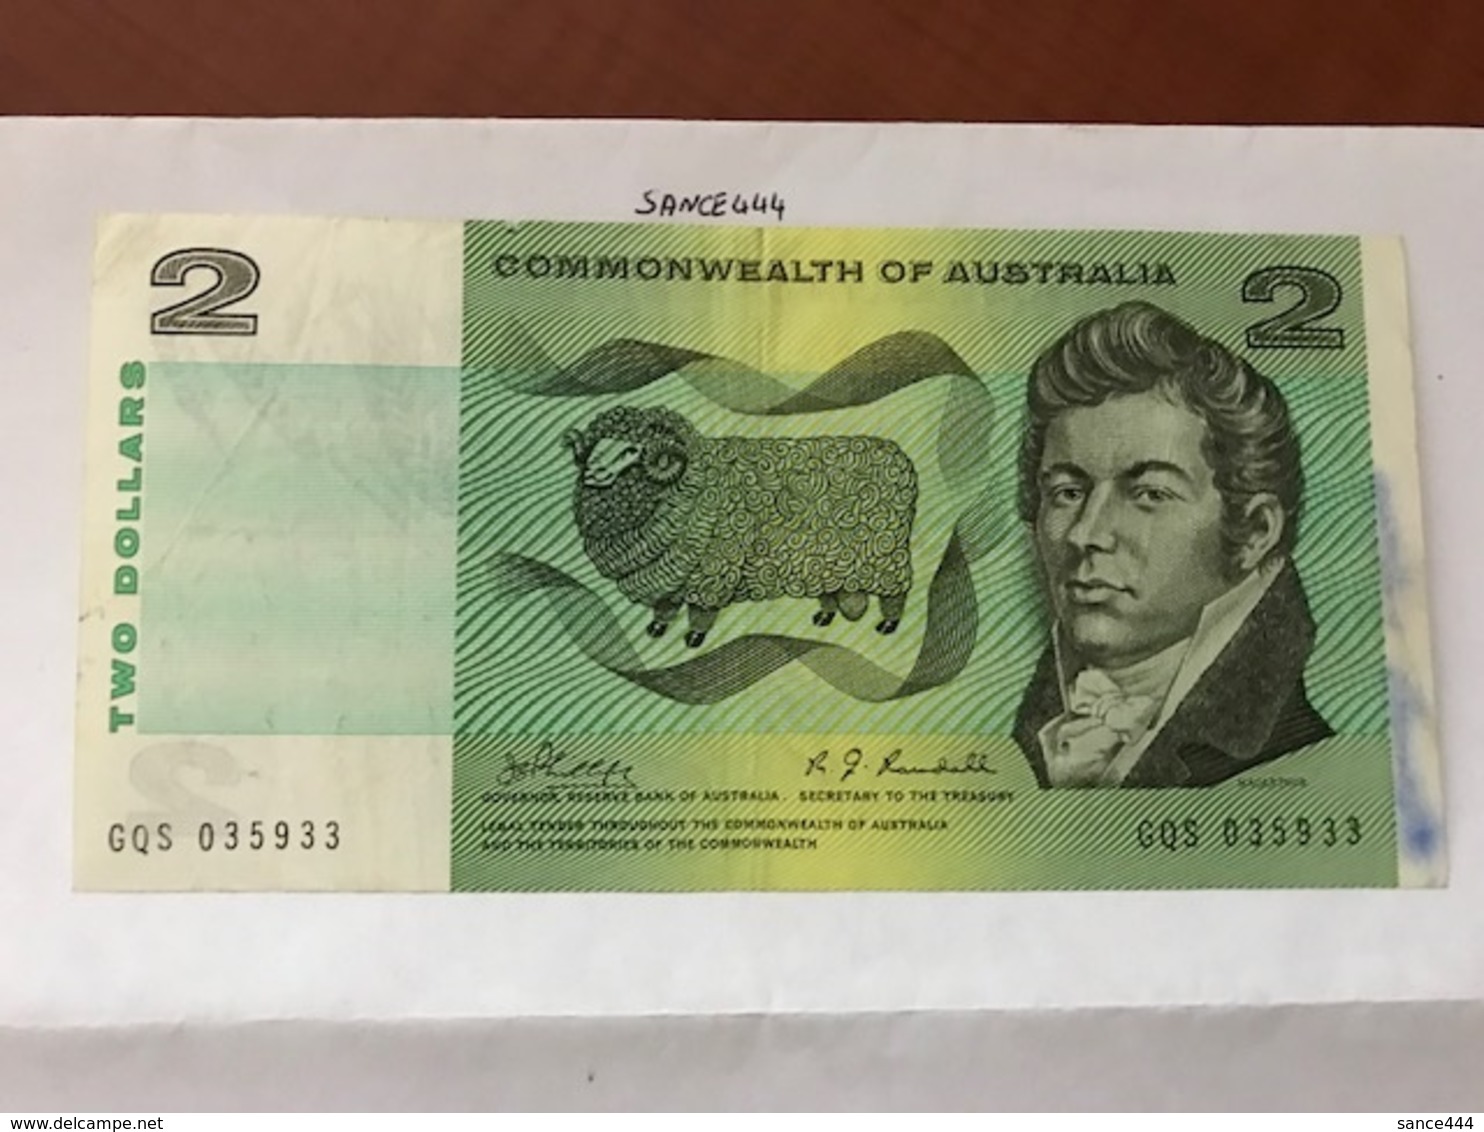 Australia Two Dollars Banknote - 1974-94 Australia Reserve Bank (papier)